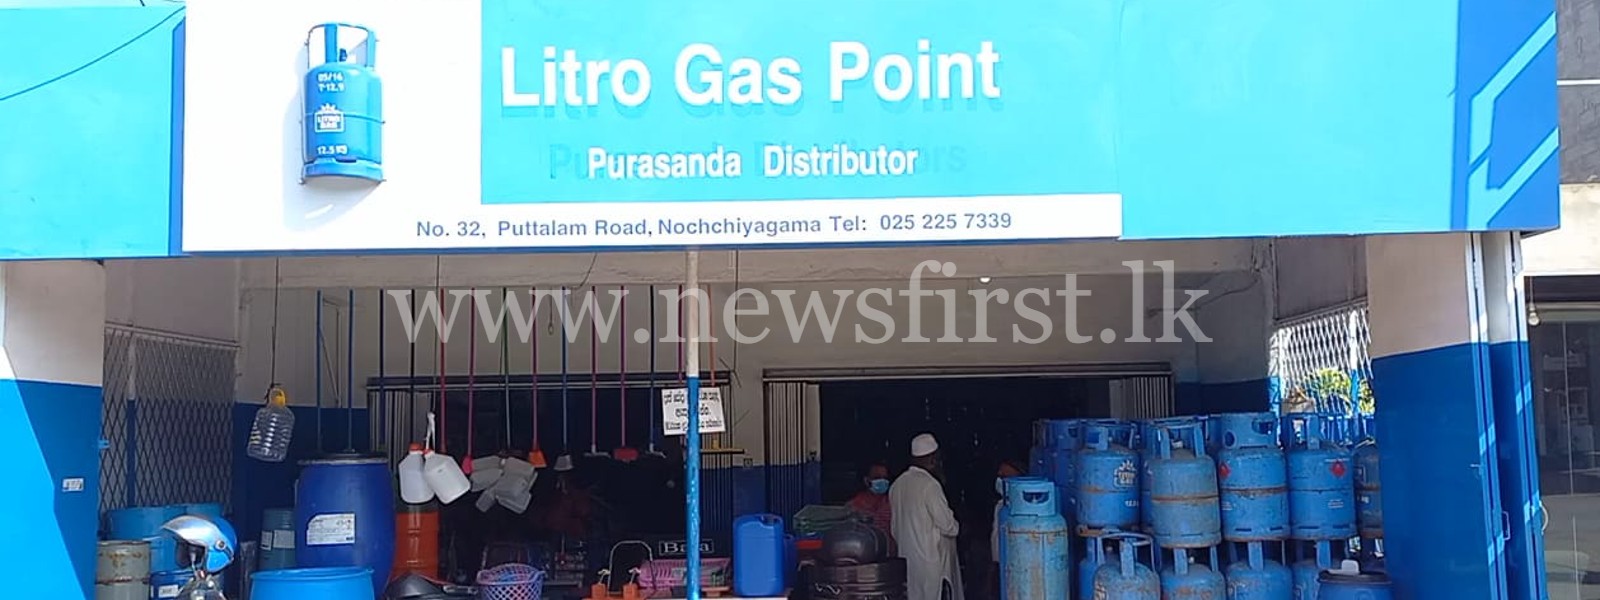 Shops closing down as Gas shortage takes its toll